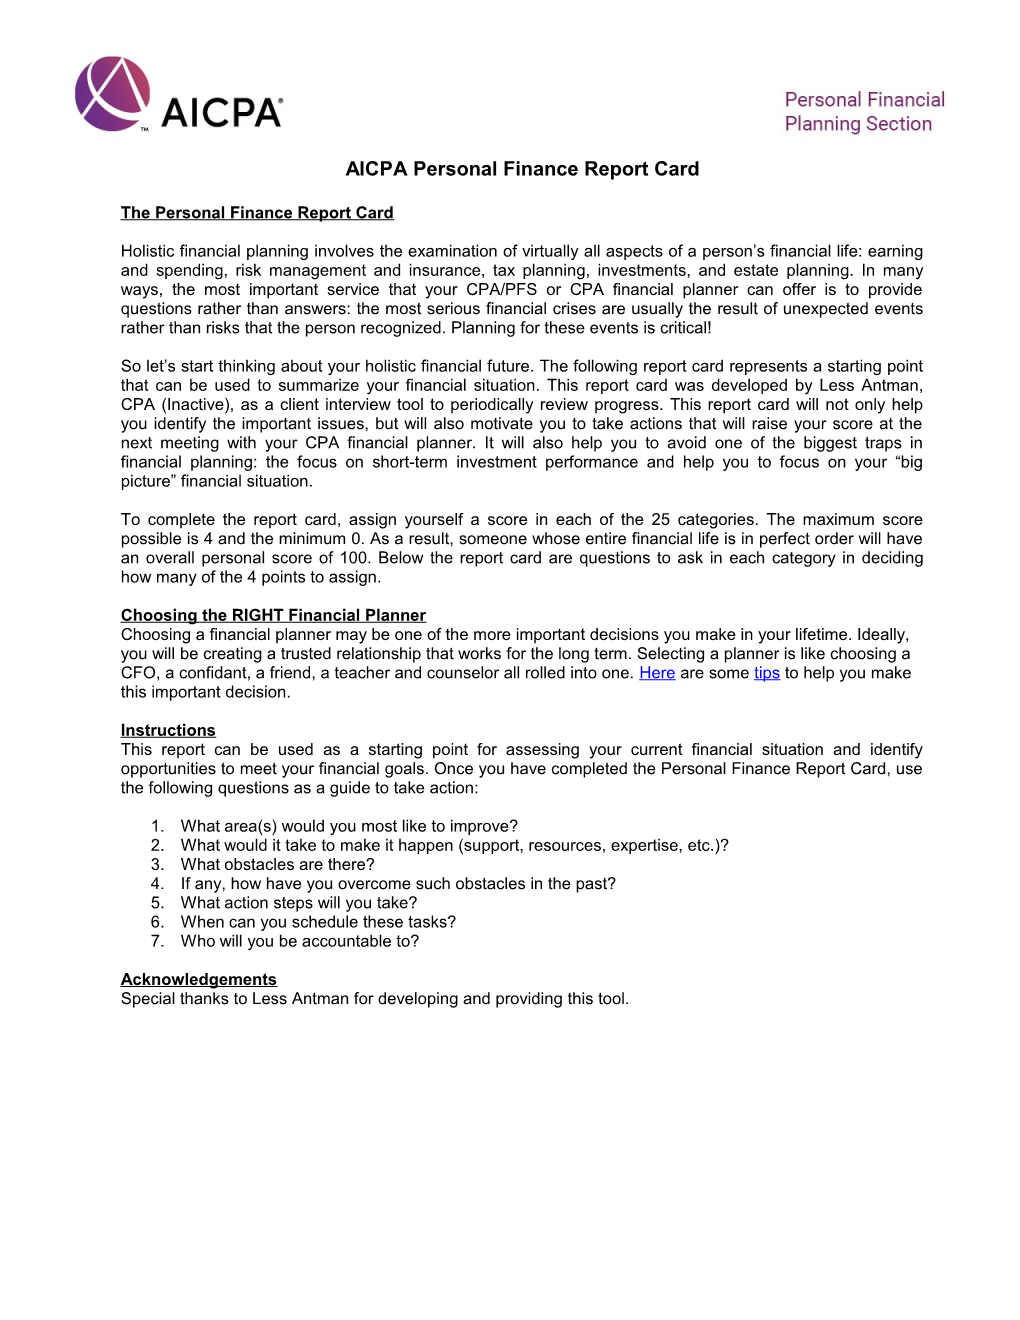 AICPA Personal Finance Report Card